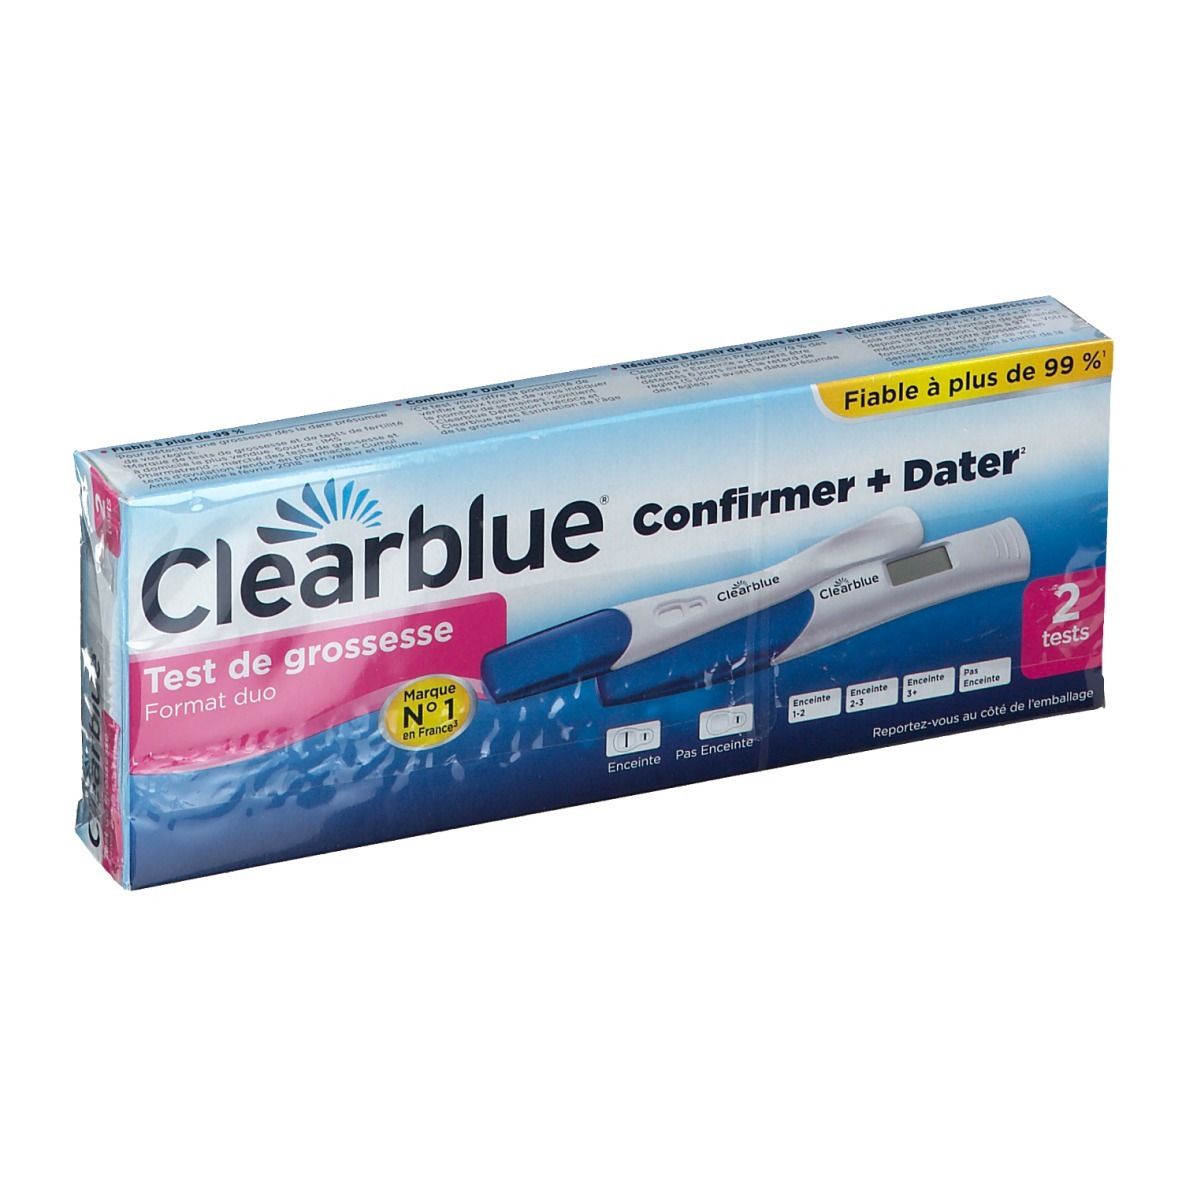 Clearblue™ Confirmer + Dater 2 Test de grossesse format duo